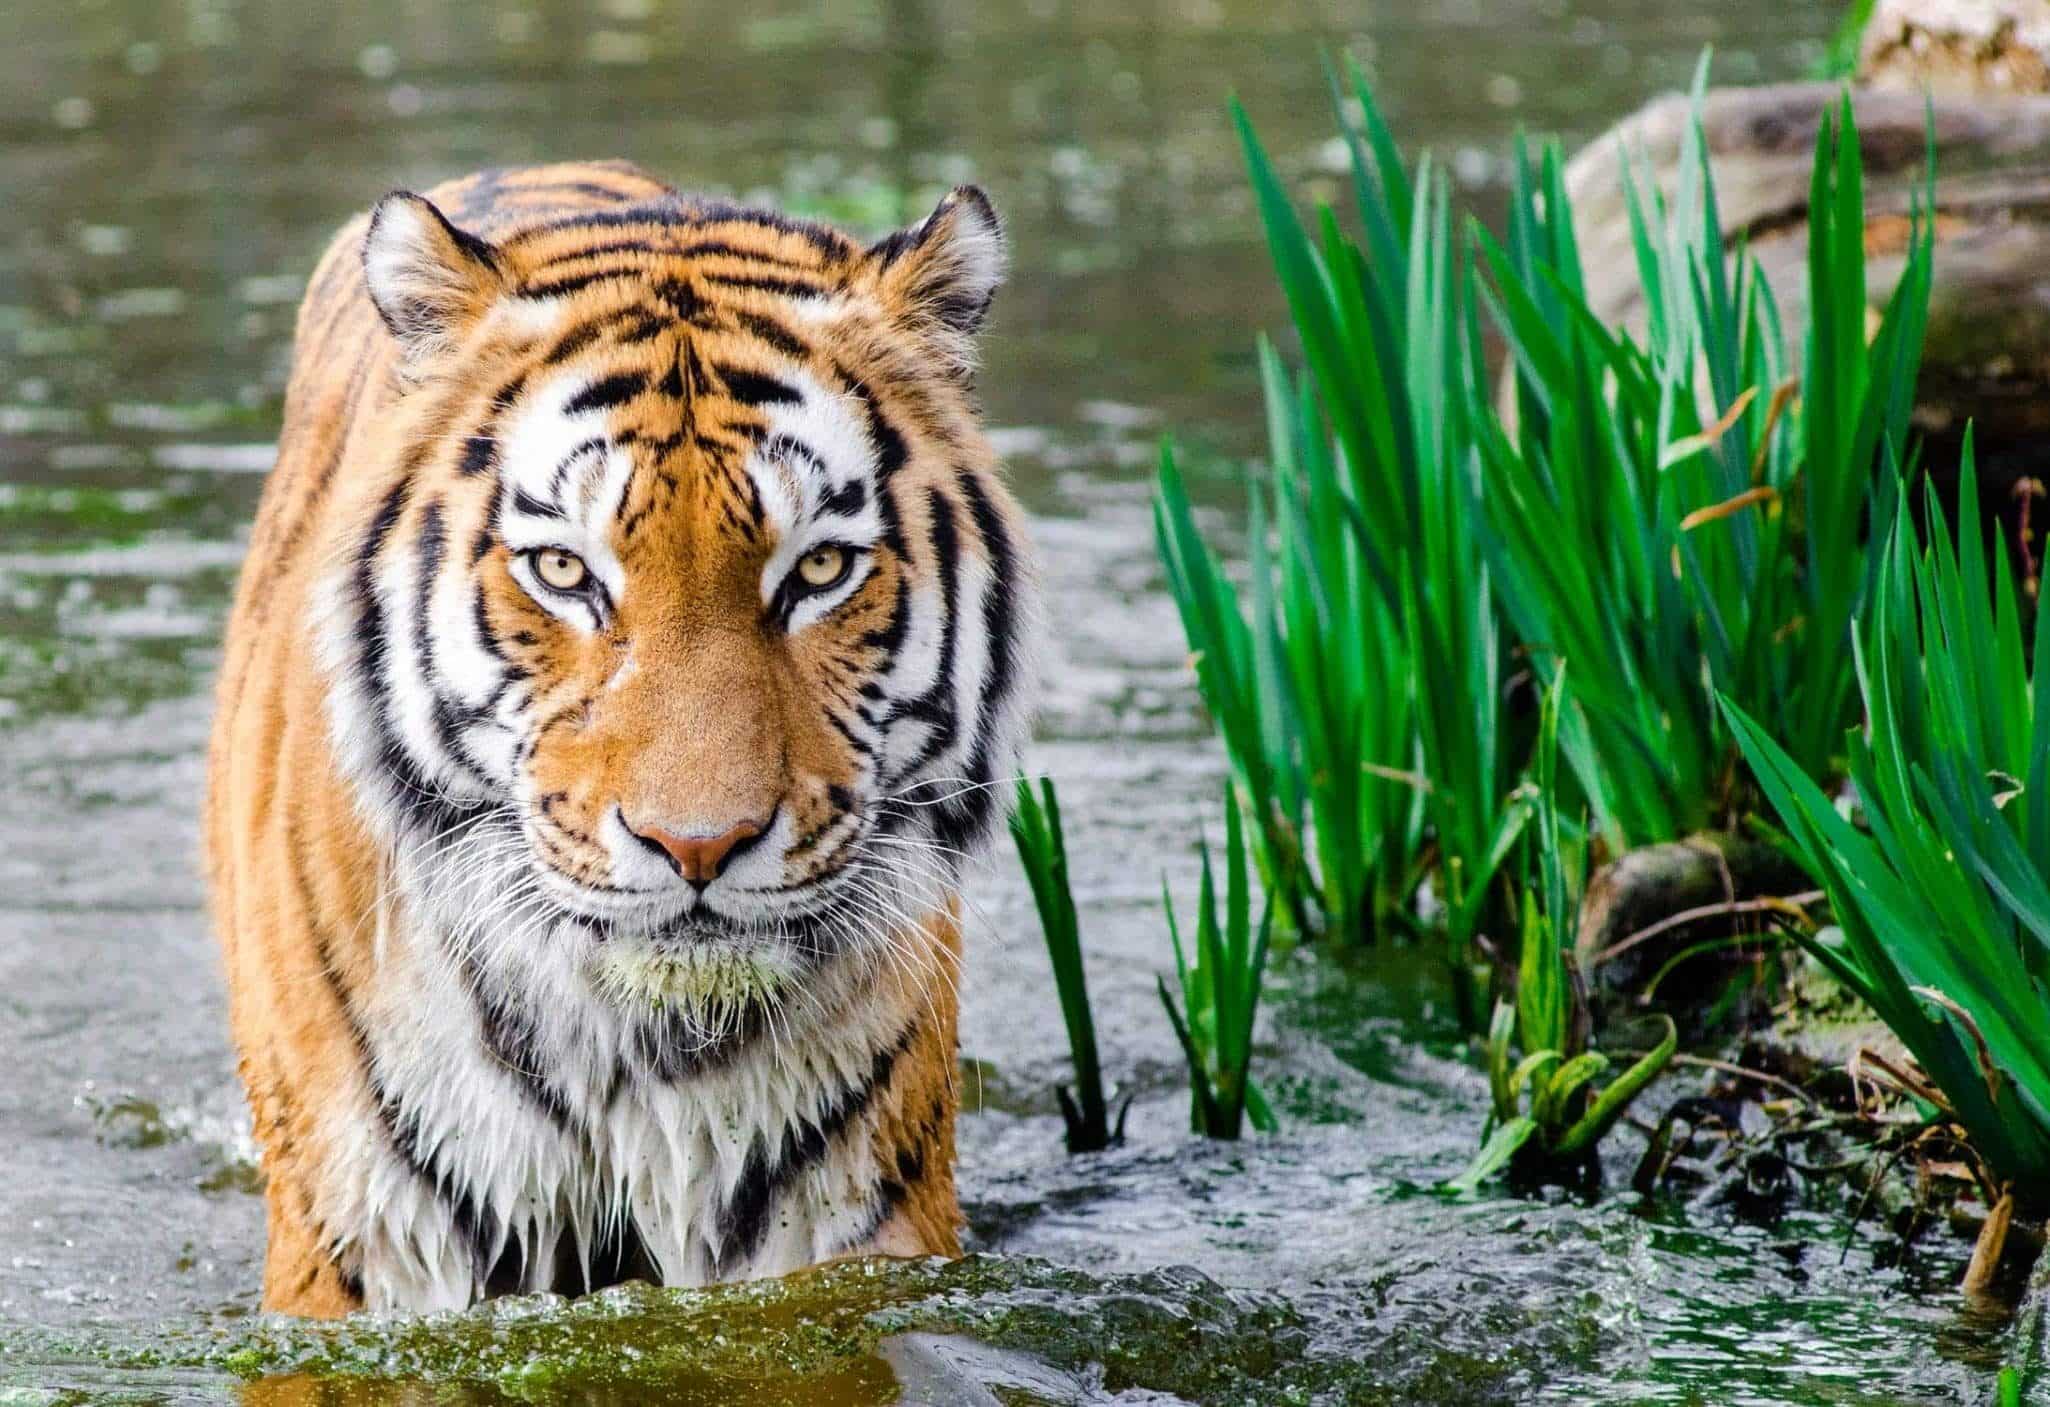 Tiger Safari - Animals Around The Globe